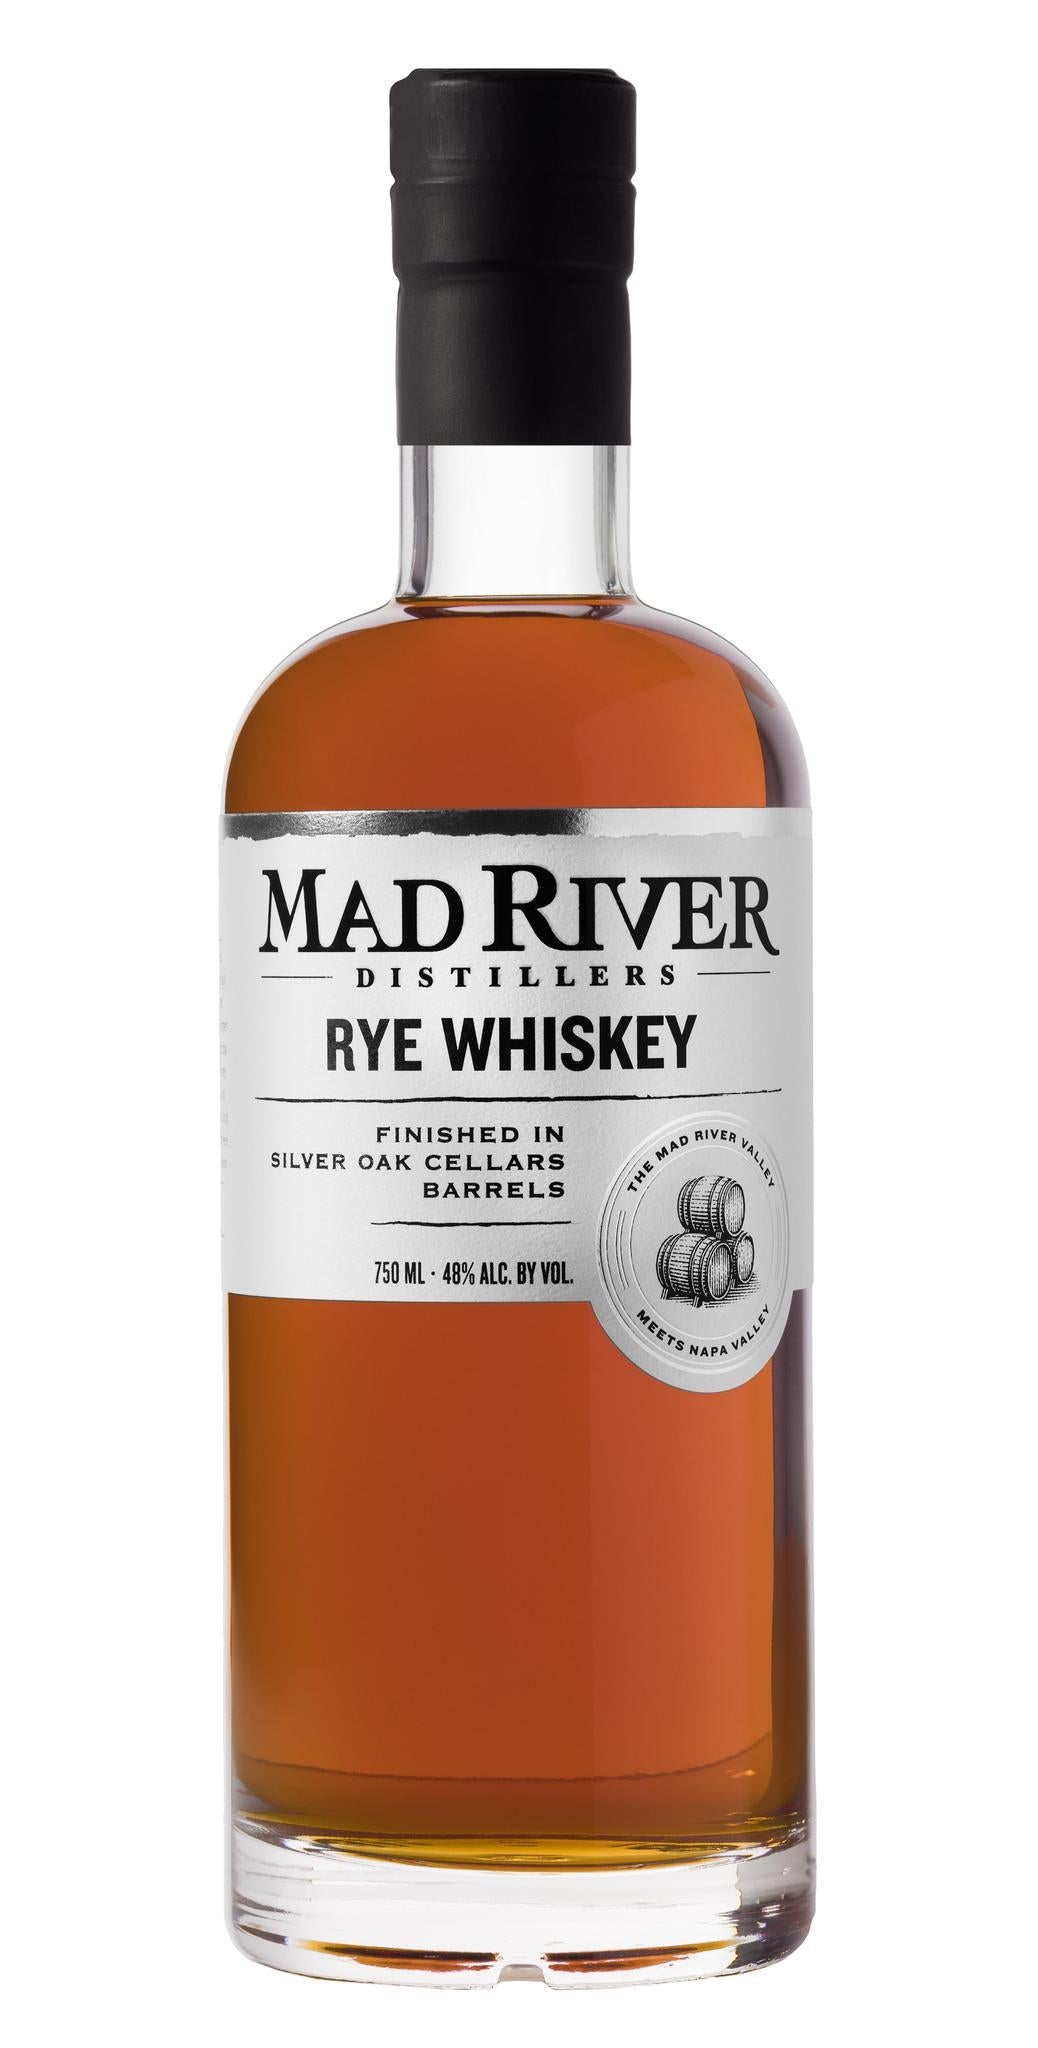 Mad River Rye Whiskey Aged in Silver Oak Cellars Barrels